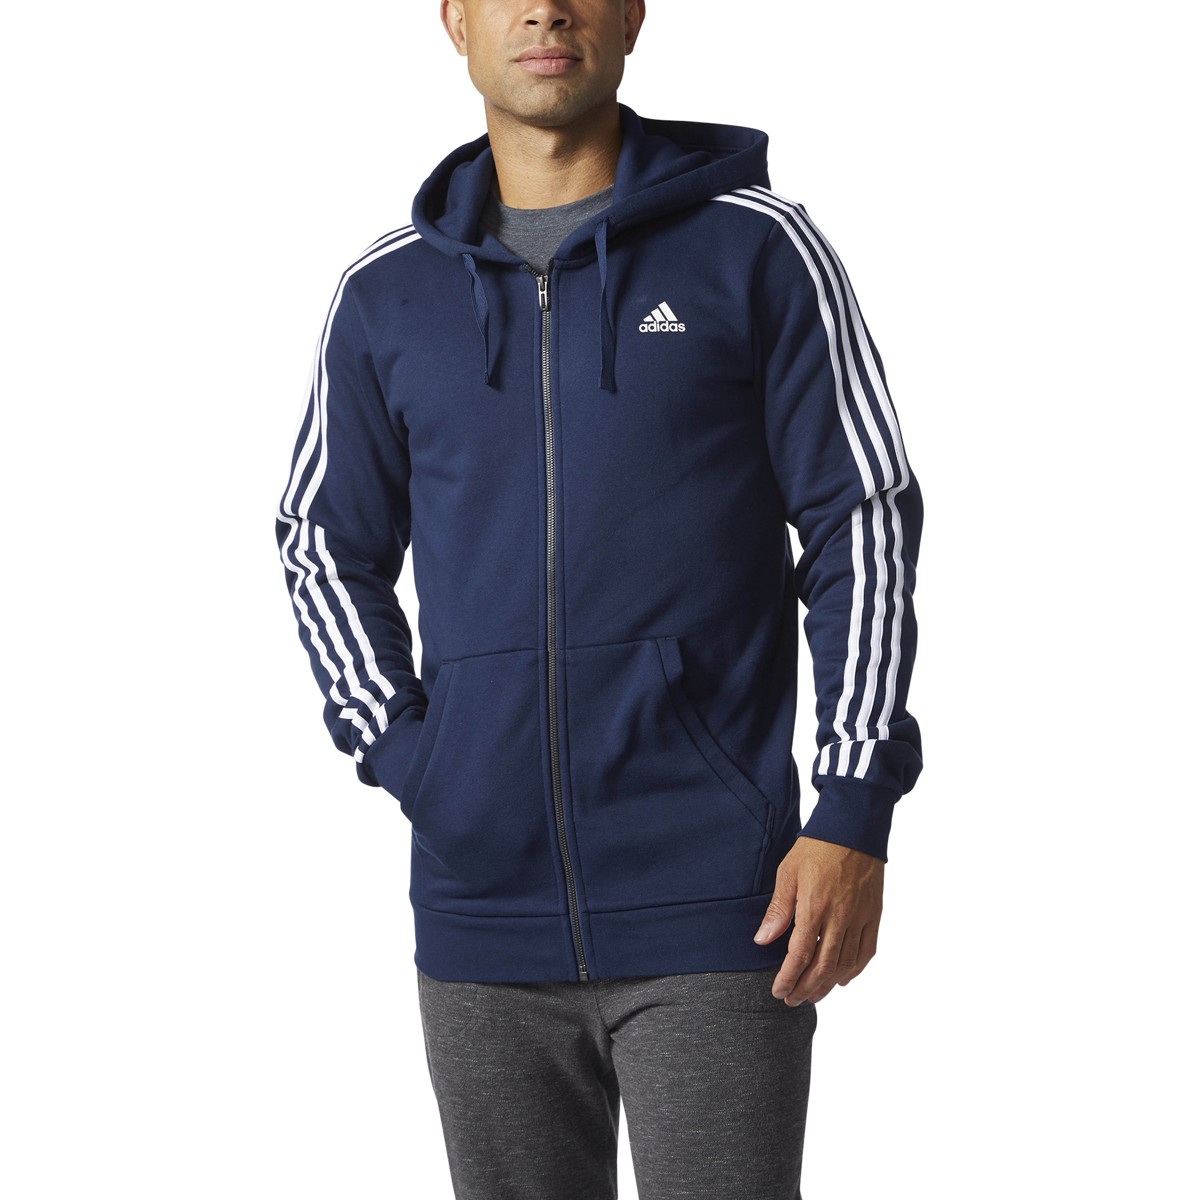 Adidas Men's Essentials 3-Stripes Fleece Hoody Navy-White BR3220 | eBay